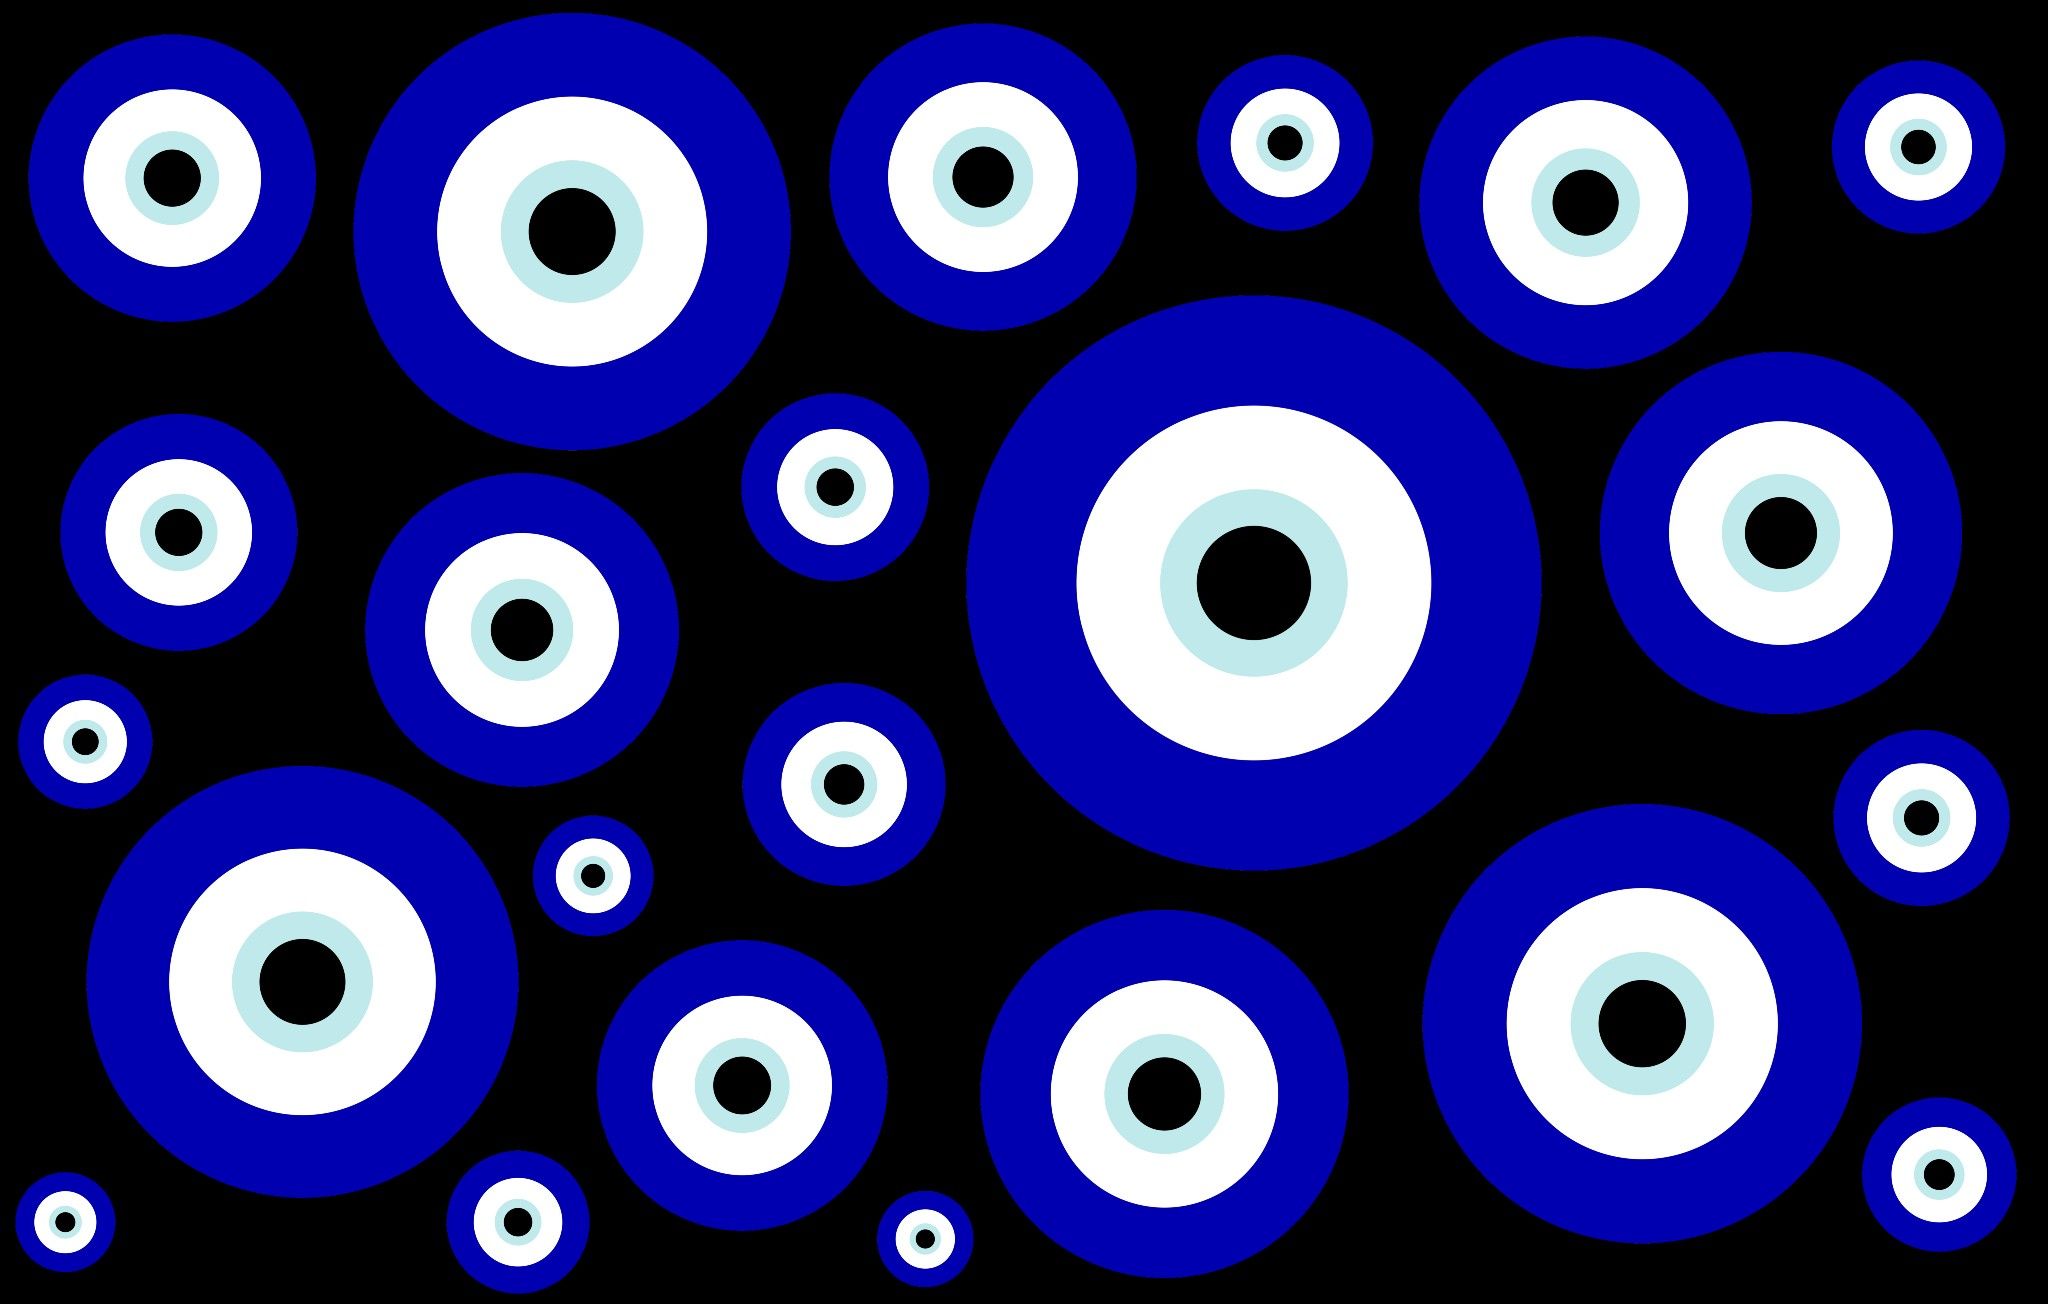 Dark Blue evil eyes. Eyes wallpaper, Blue aesthetic dark, Cute laptop wallpaper